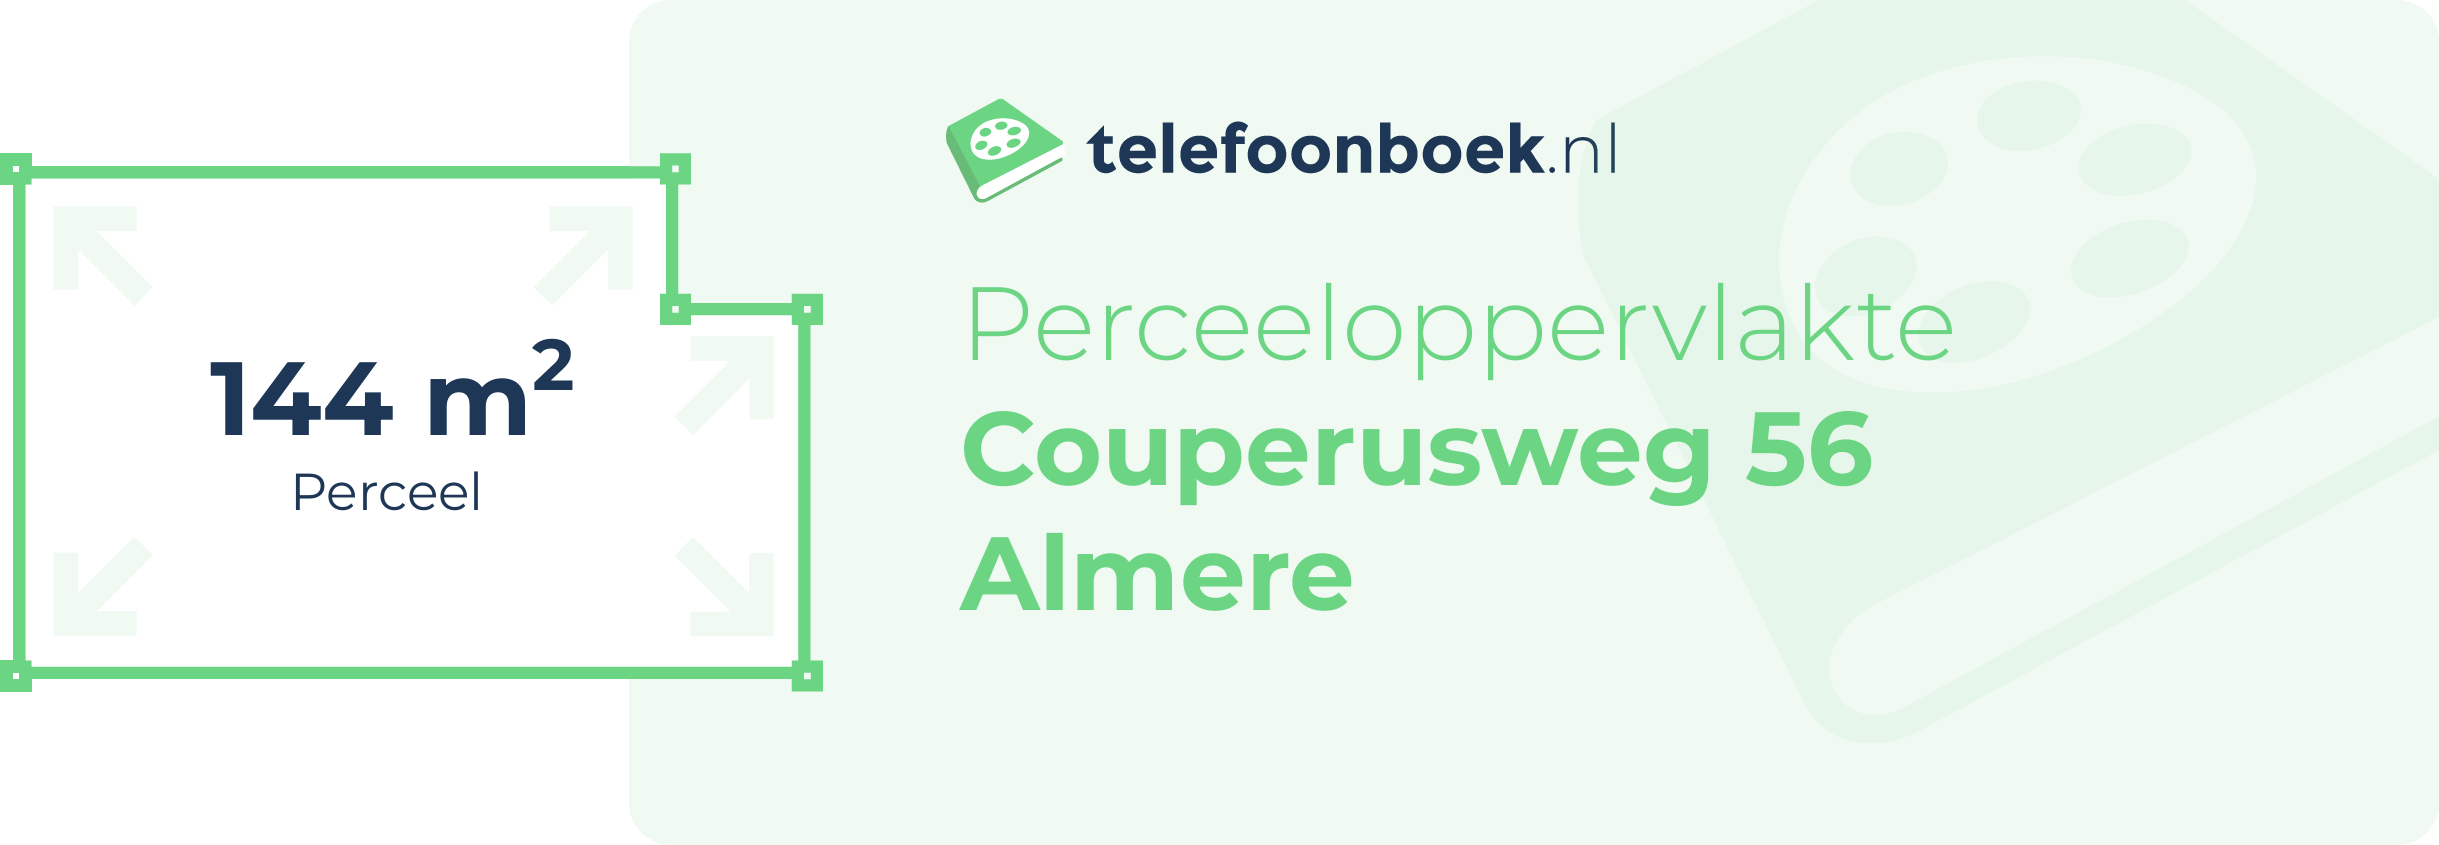 Perceeloppervlakte Couperusweg 56 Almere